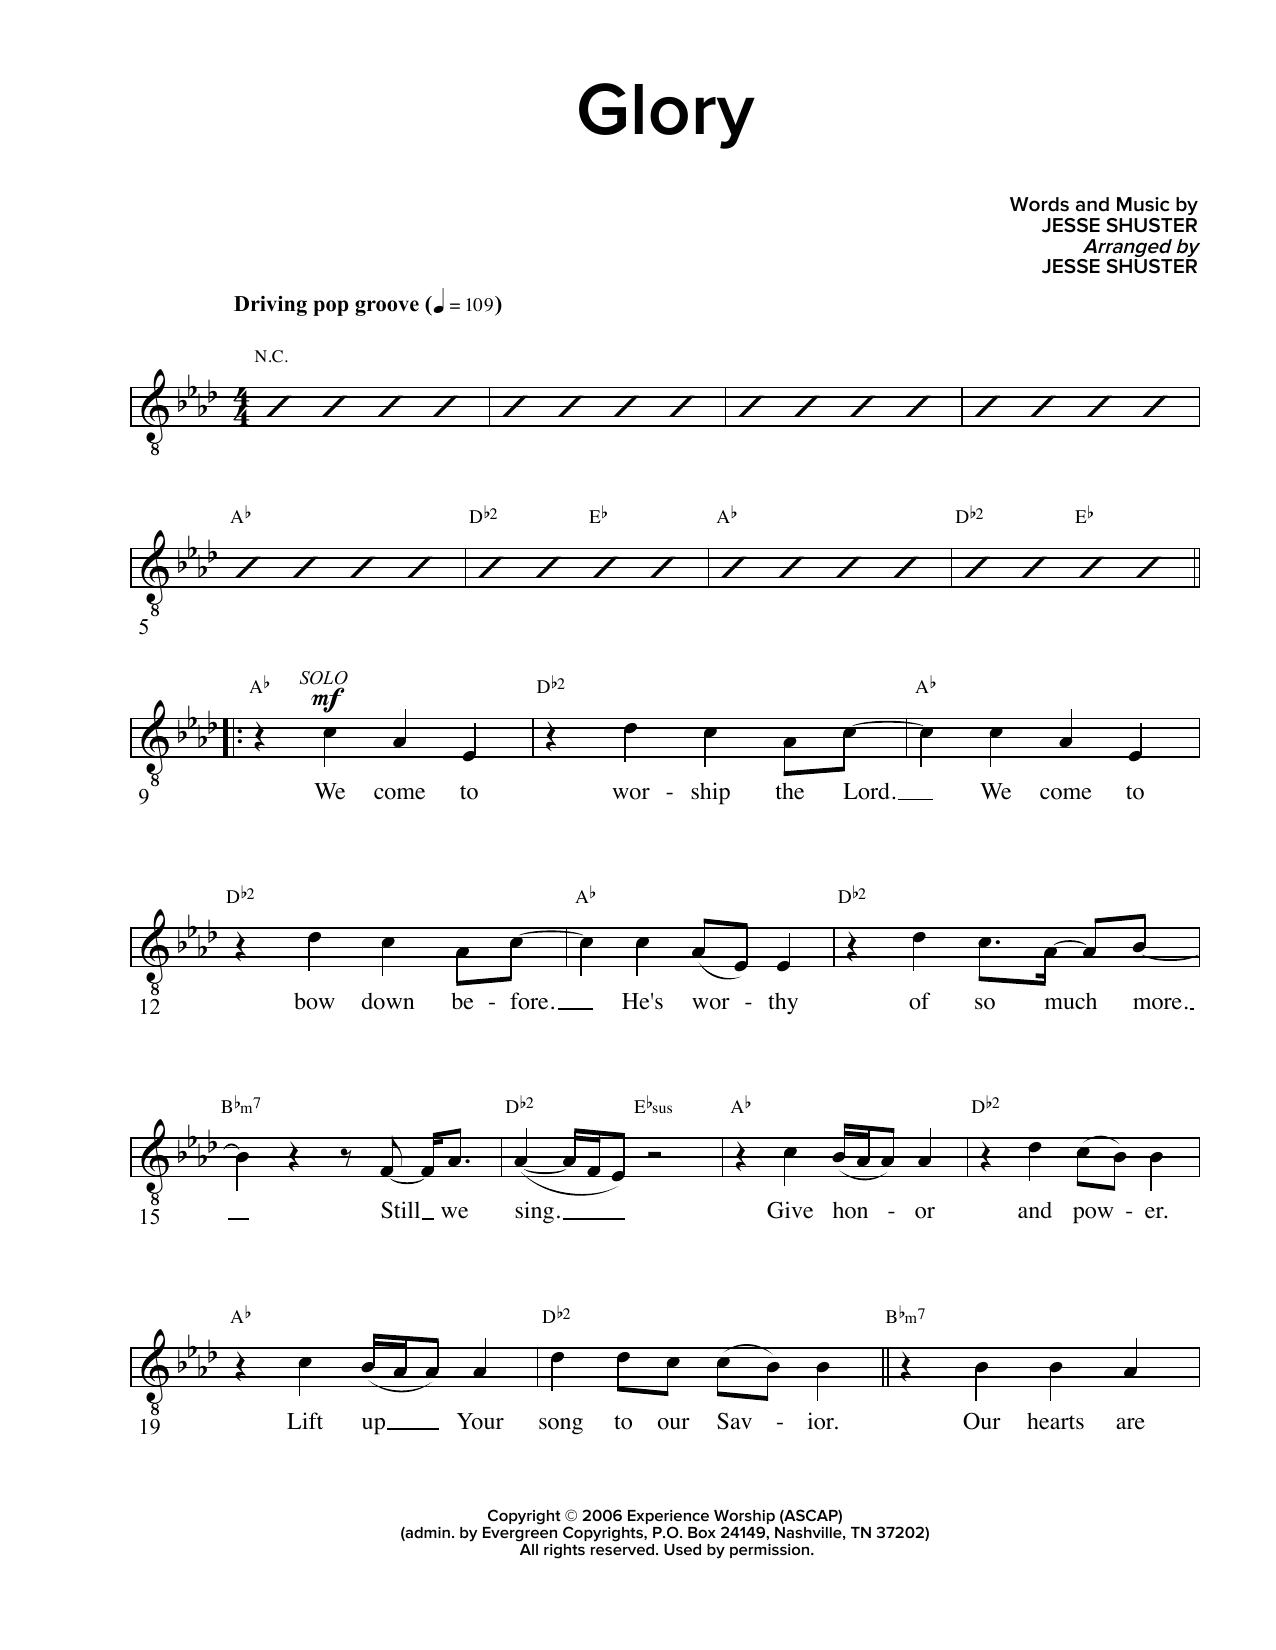 Jesse Shuster Glory Sheet Music Notes & Chords for Guitar Chords/Lyrics - Download or Print PDF